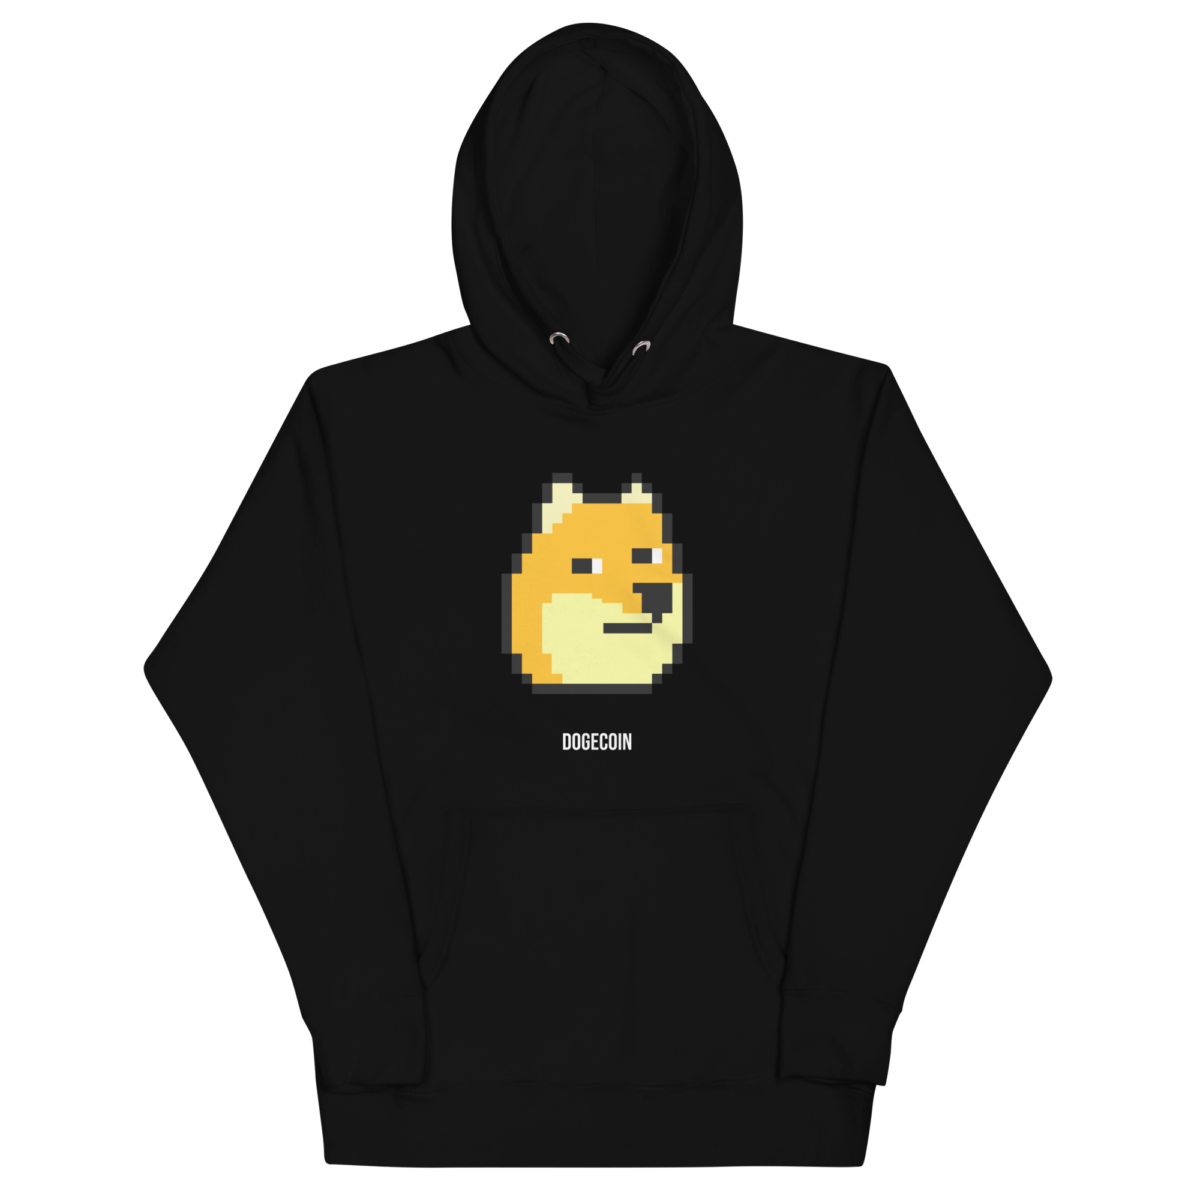 unisex premium hoodie black front 6322310d05e32 - Dogecoin 8BIT Hoodie